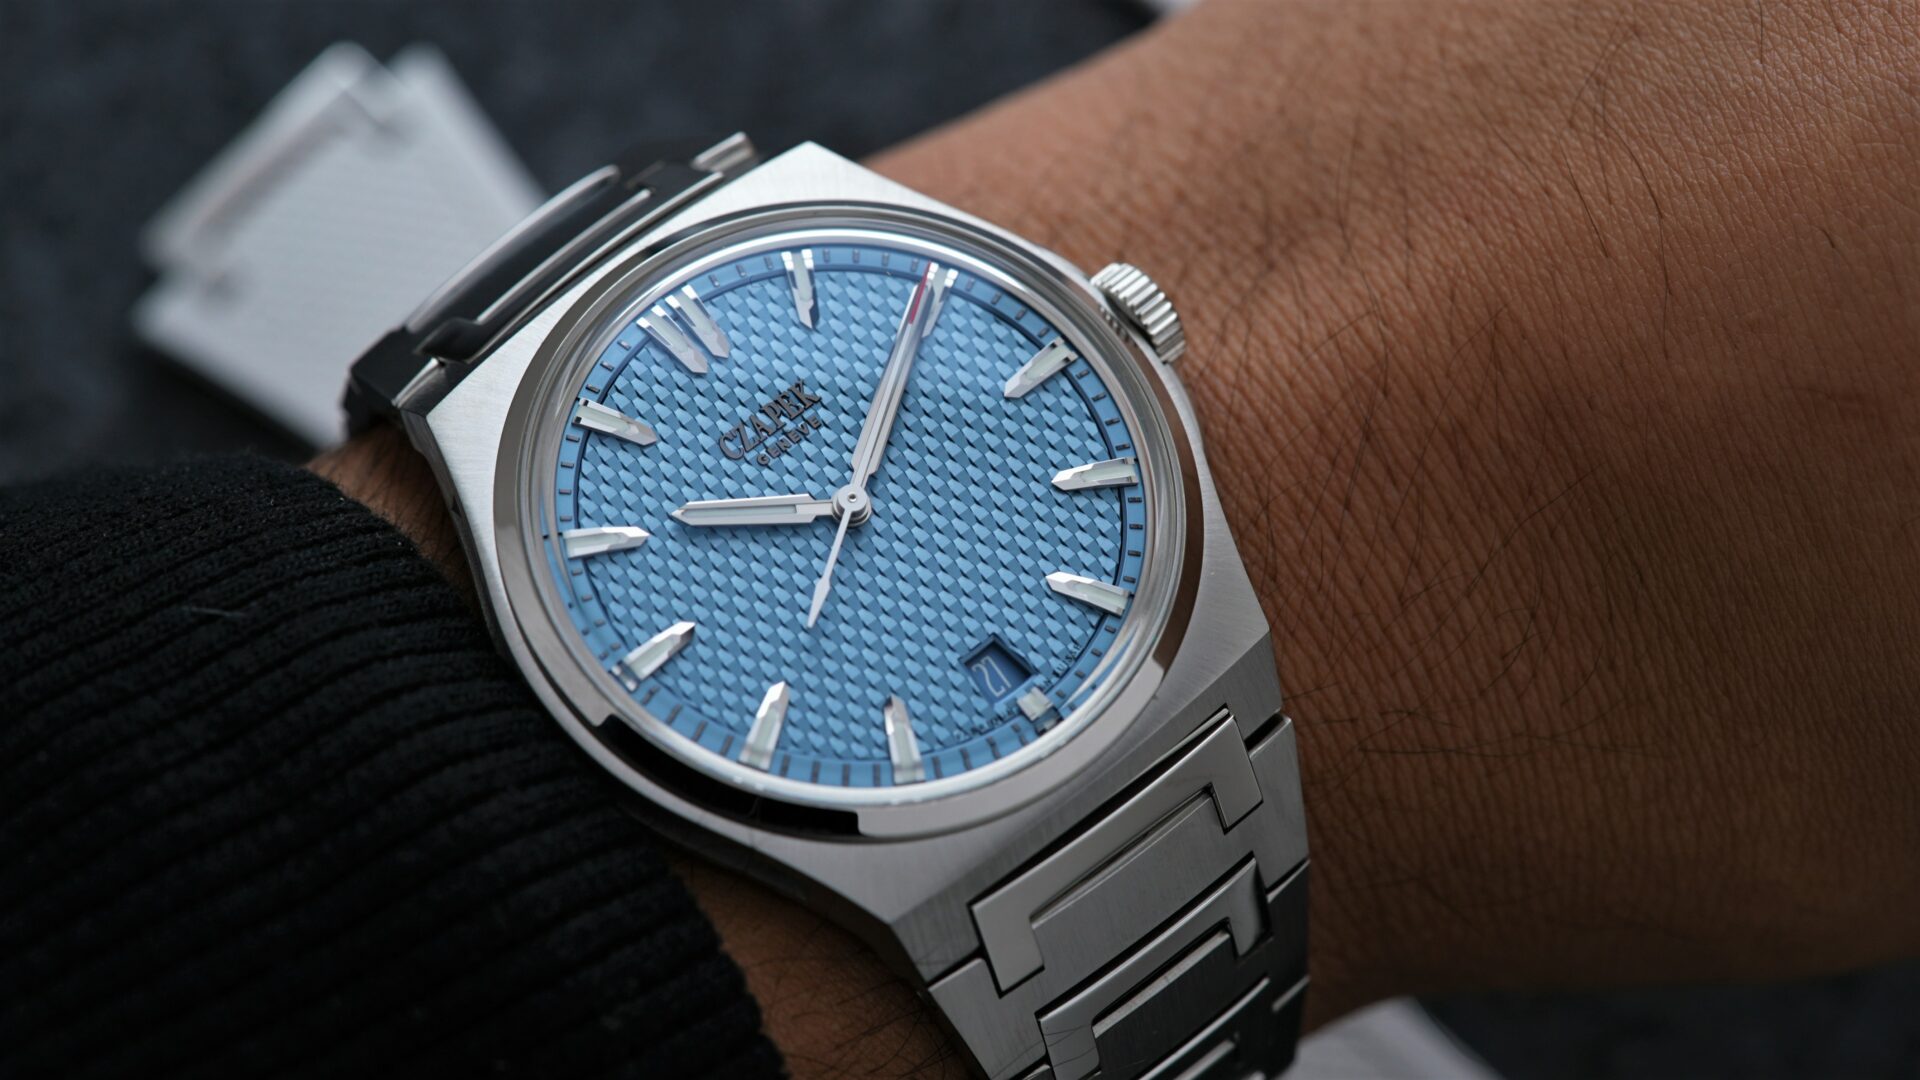 Czapek Passage de Drake Rare Glacier Blue Limited Production watch displayed on the wrist.